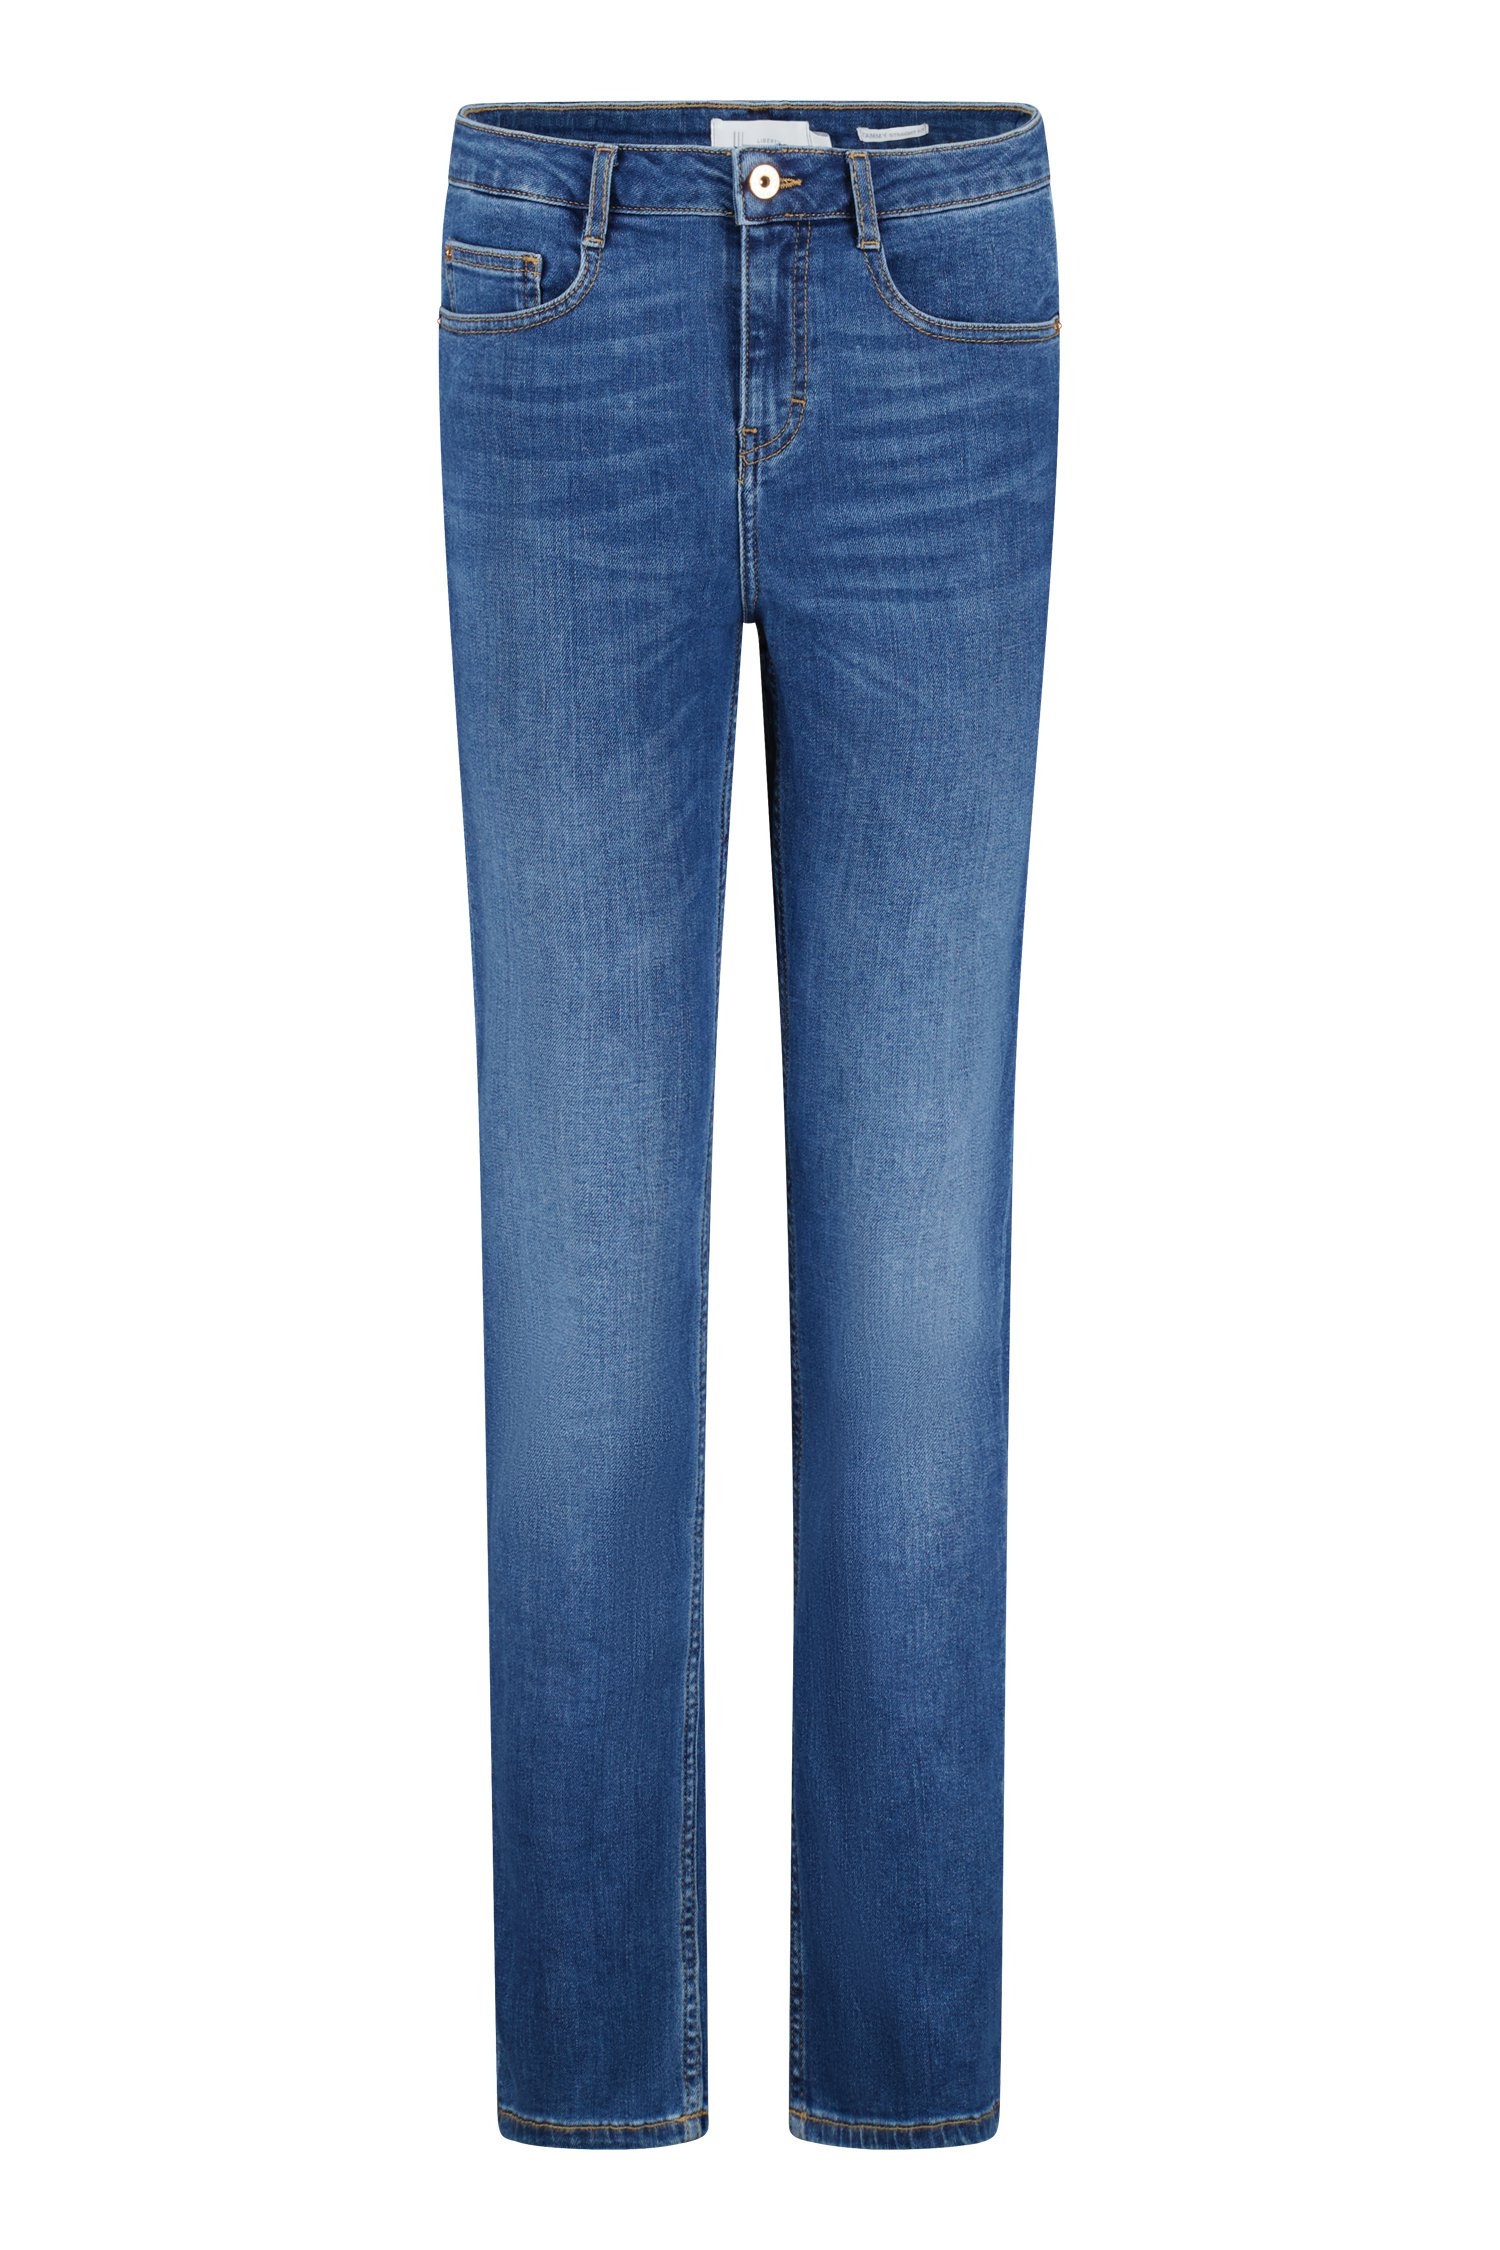 Blauwe jeans - Tammy - straight fit - L32 van Liberty Island Denim voor Dames